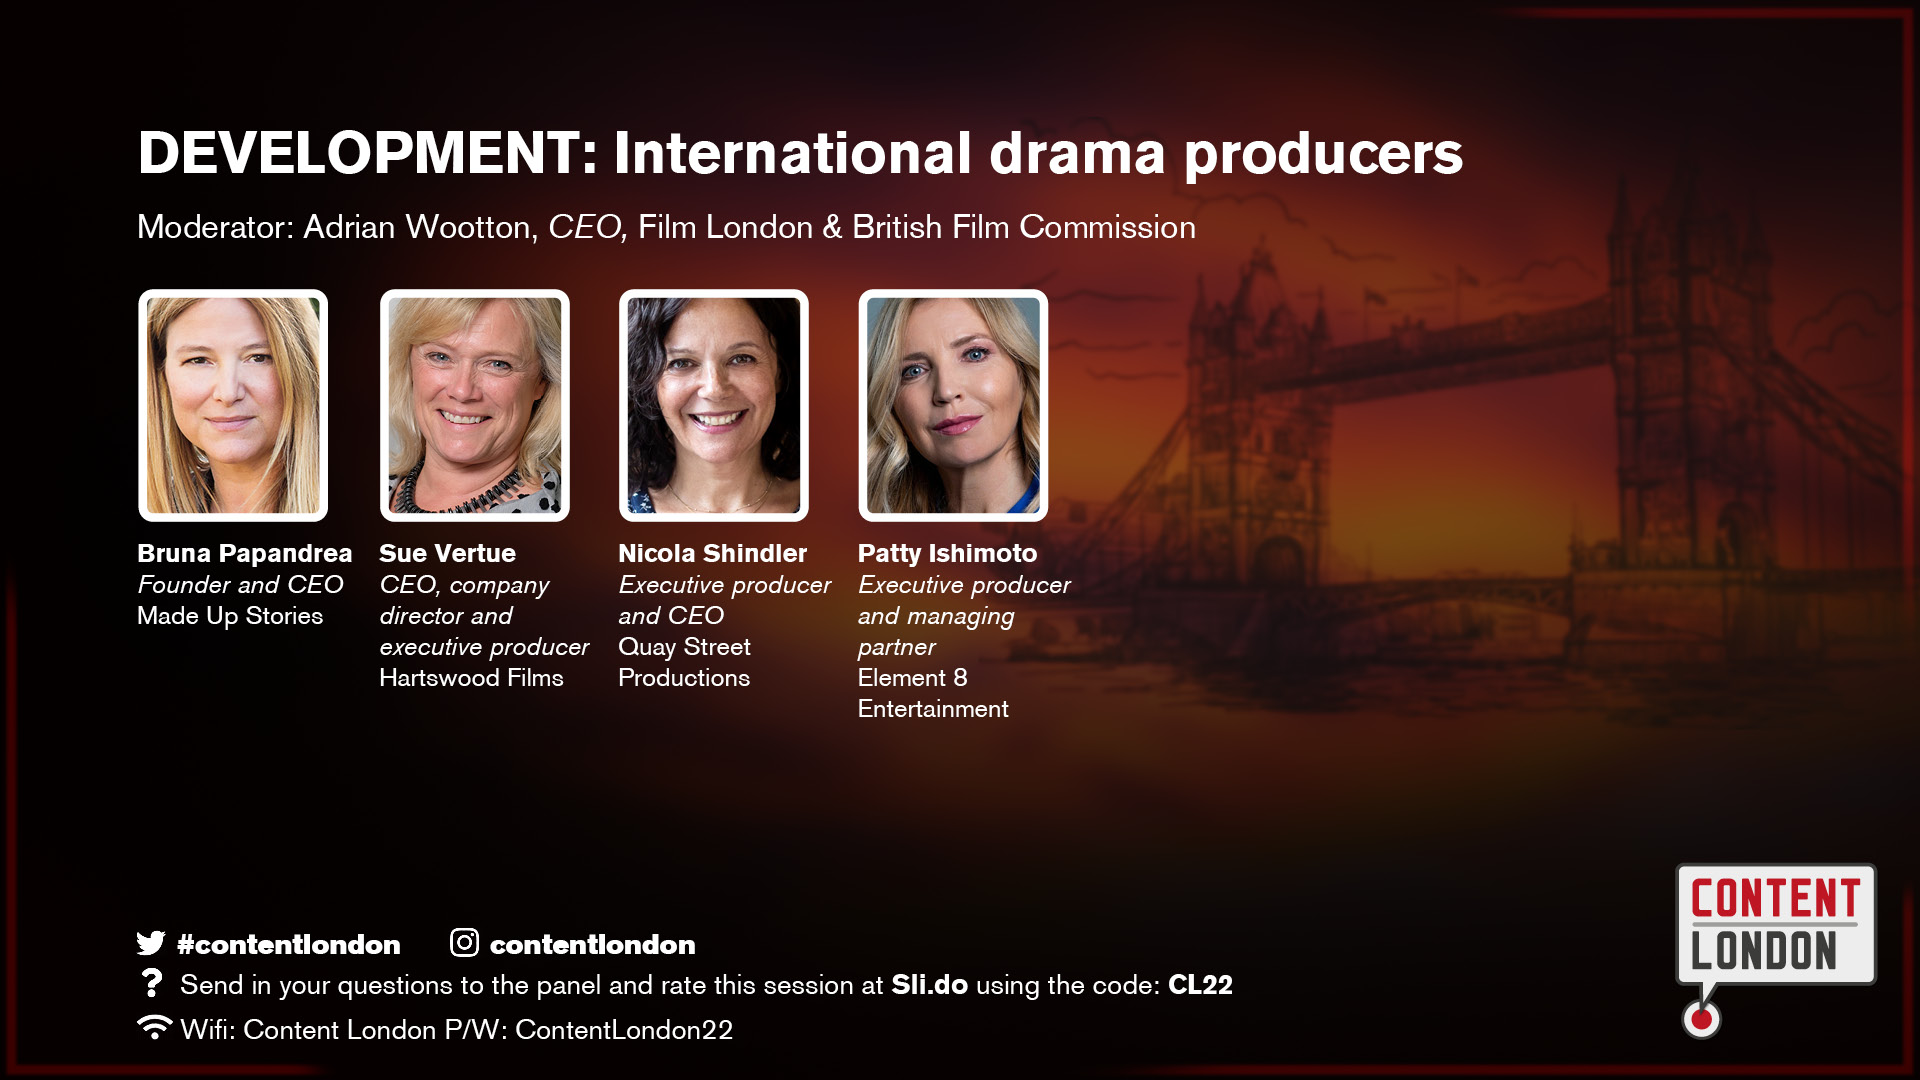 DEVELOPMENT: International drama producers